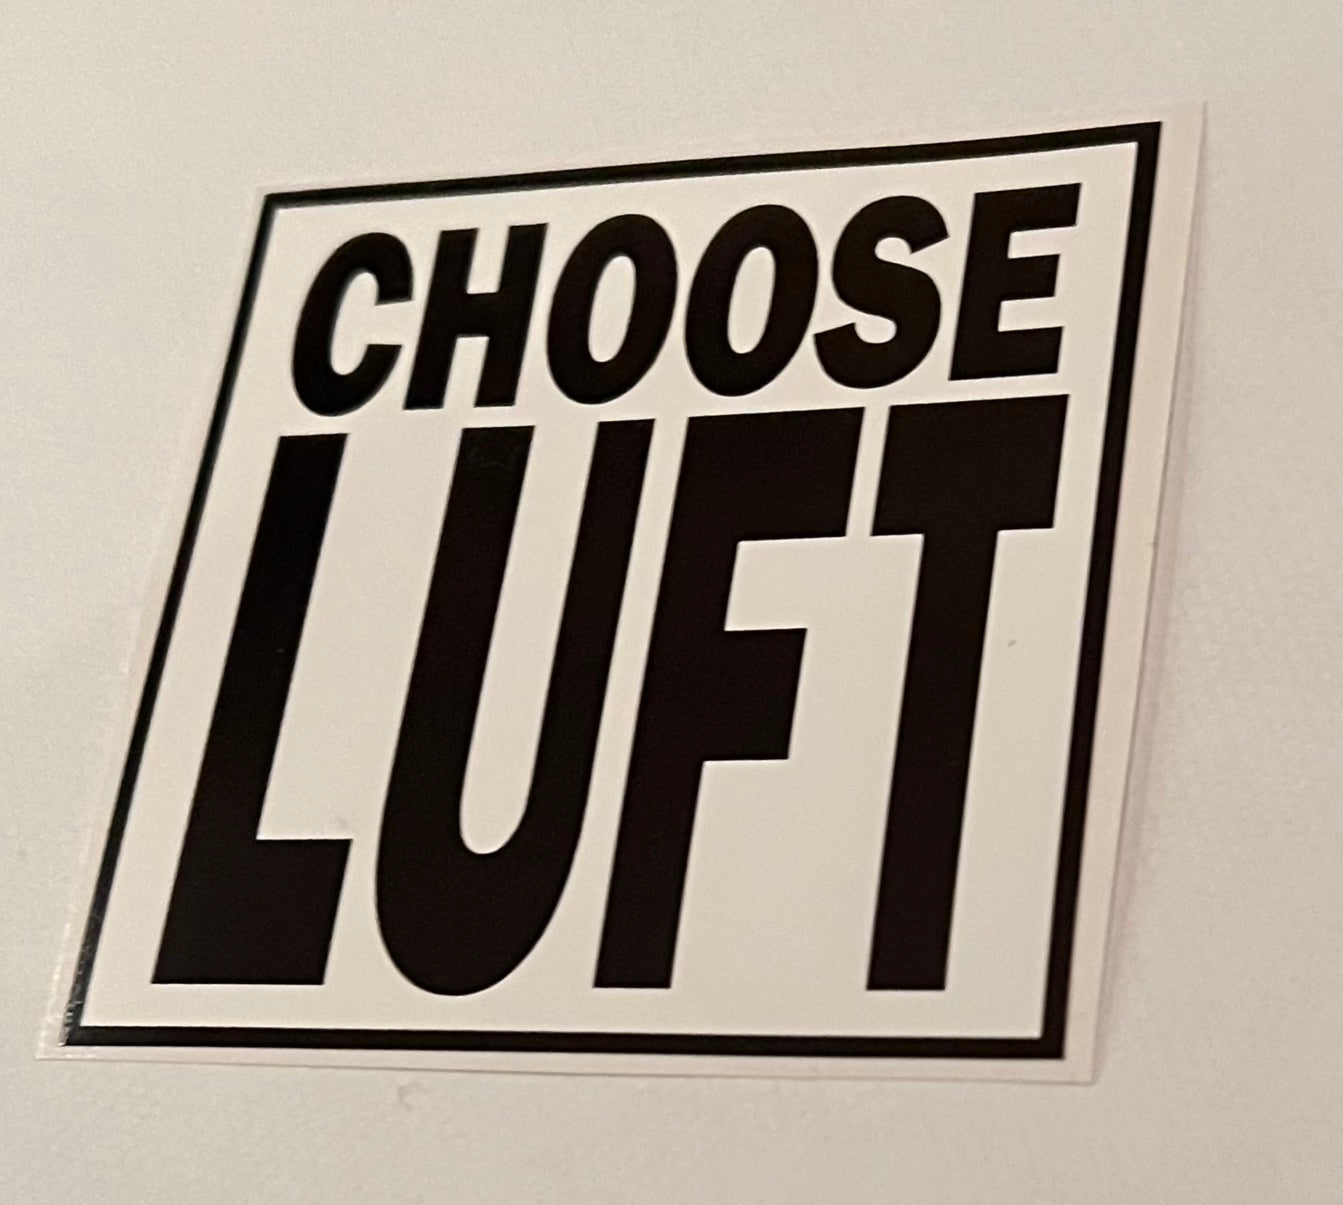 Choose Luft sticker, 7cm square